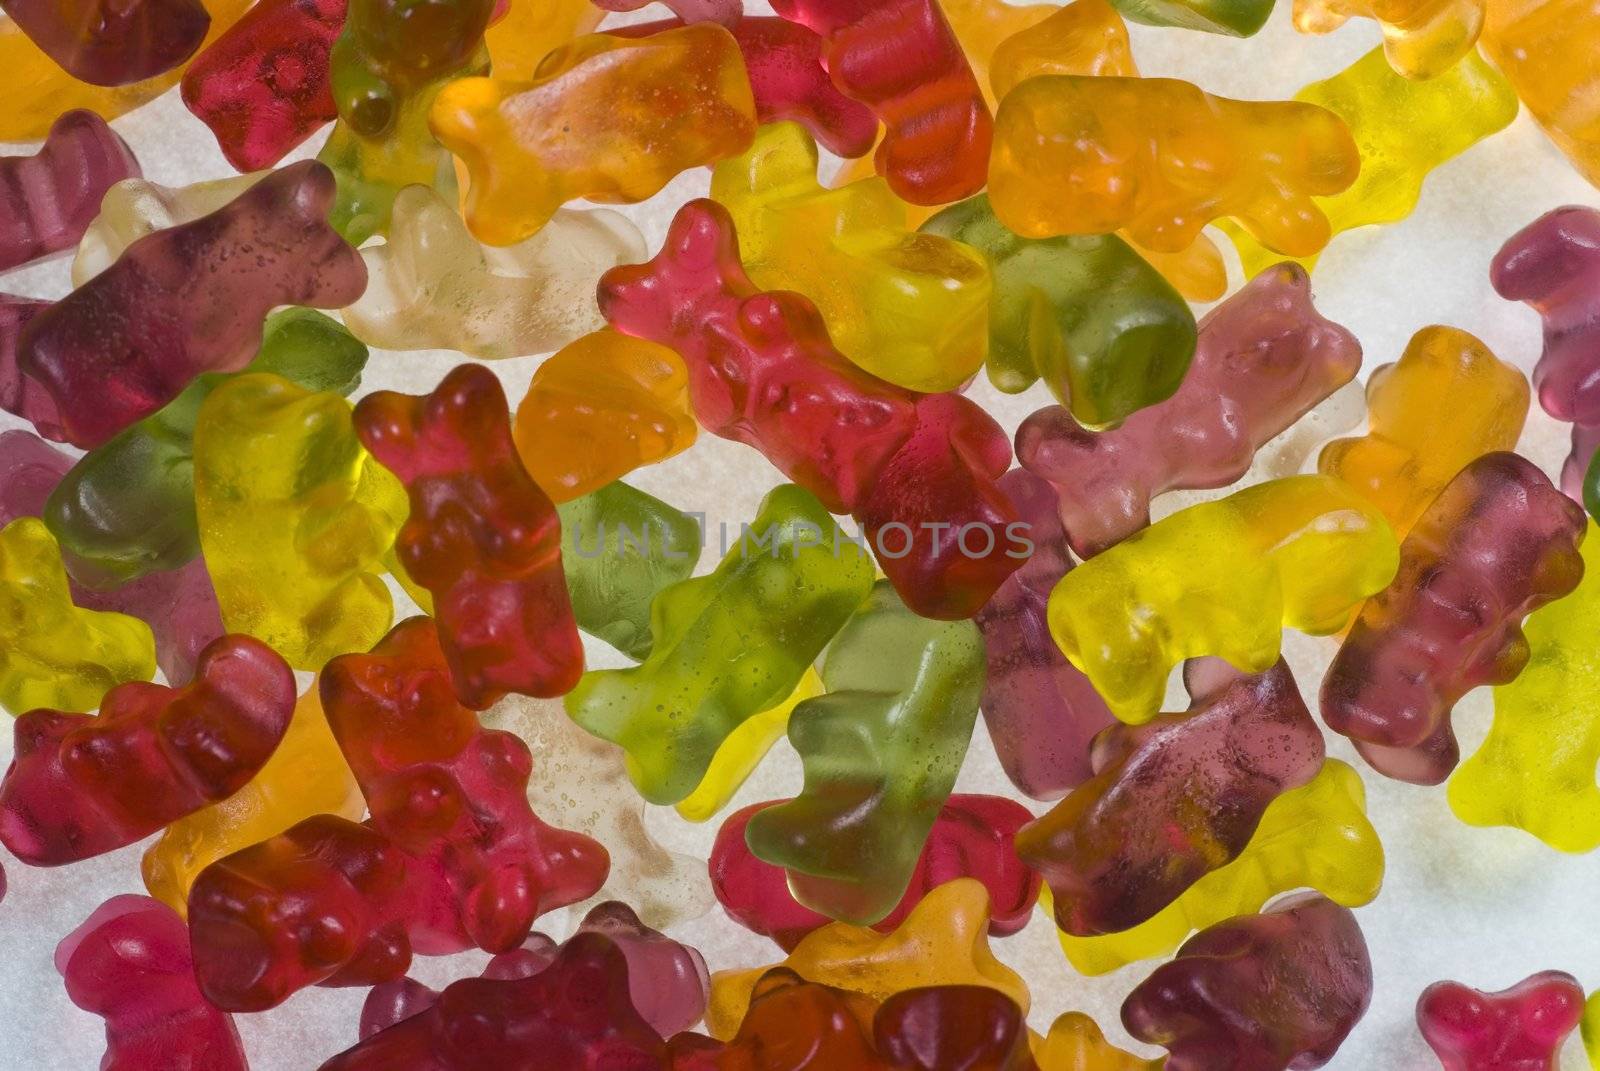 Coloured gummi-bears  on white background

